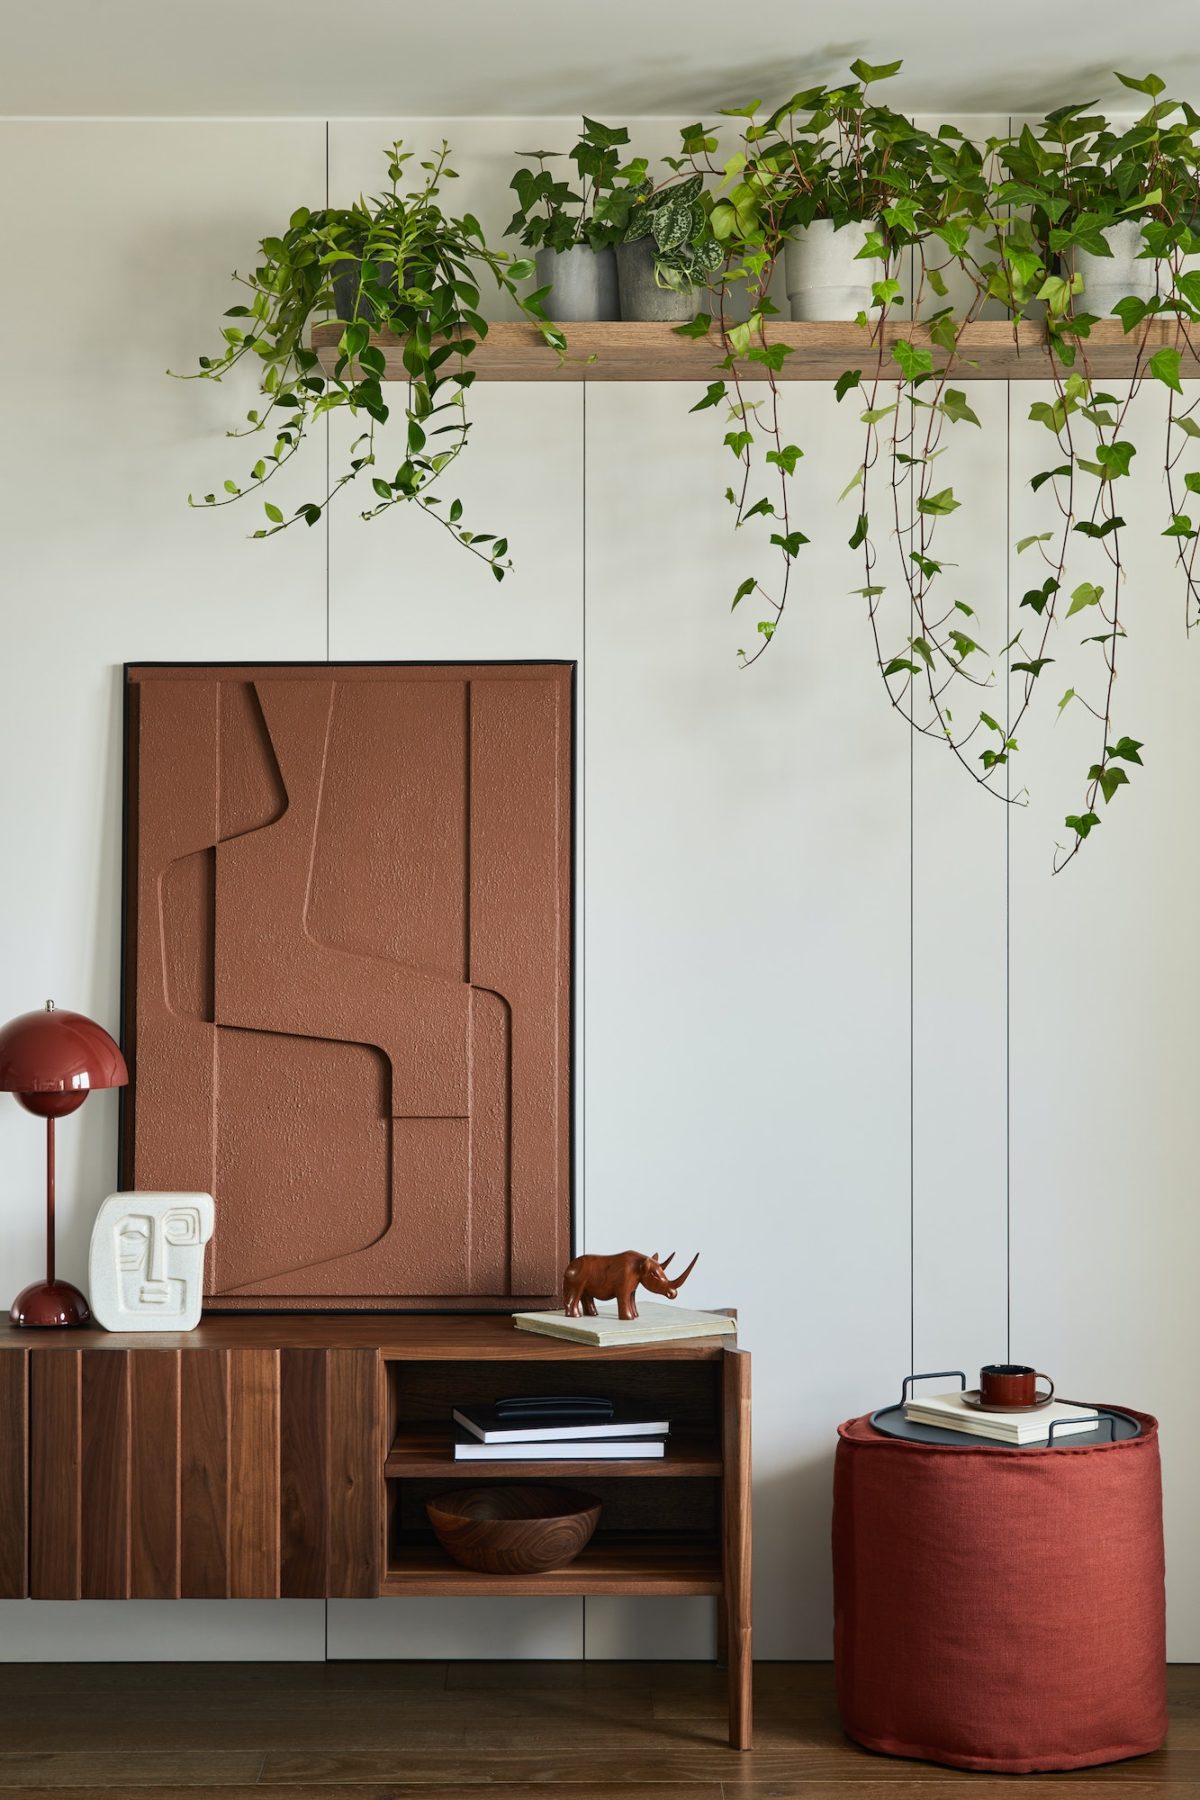 Stylish and creative living room interior design